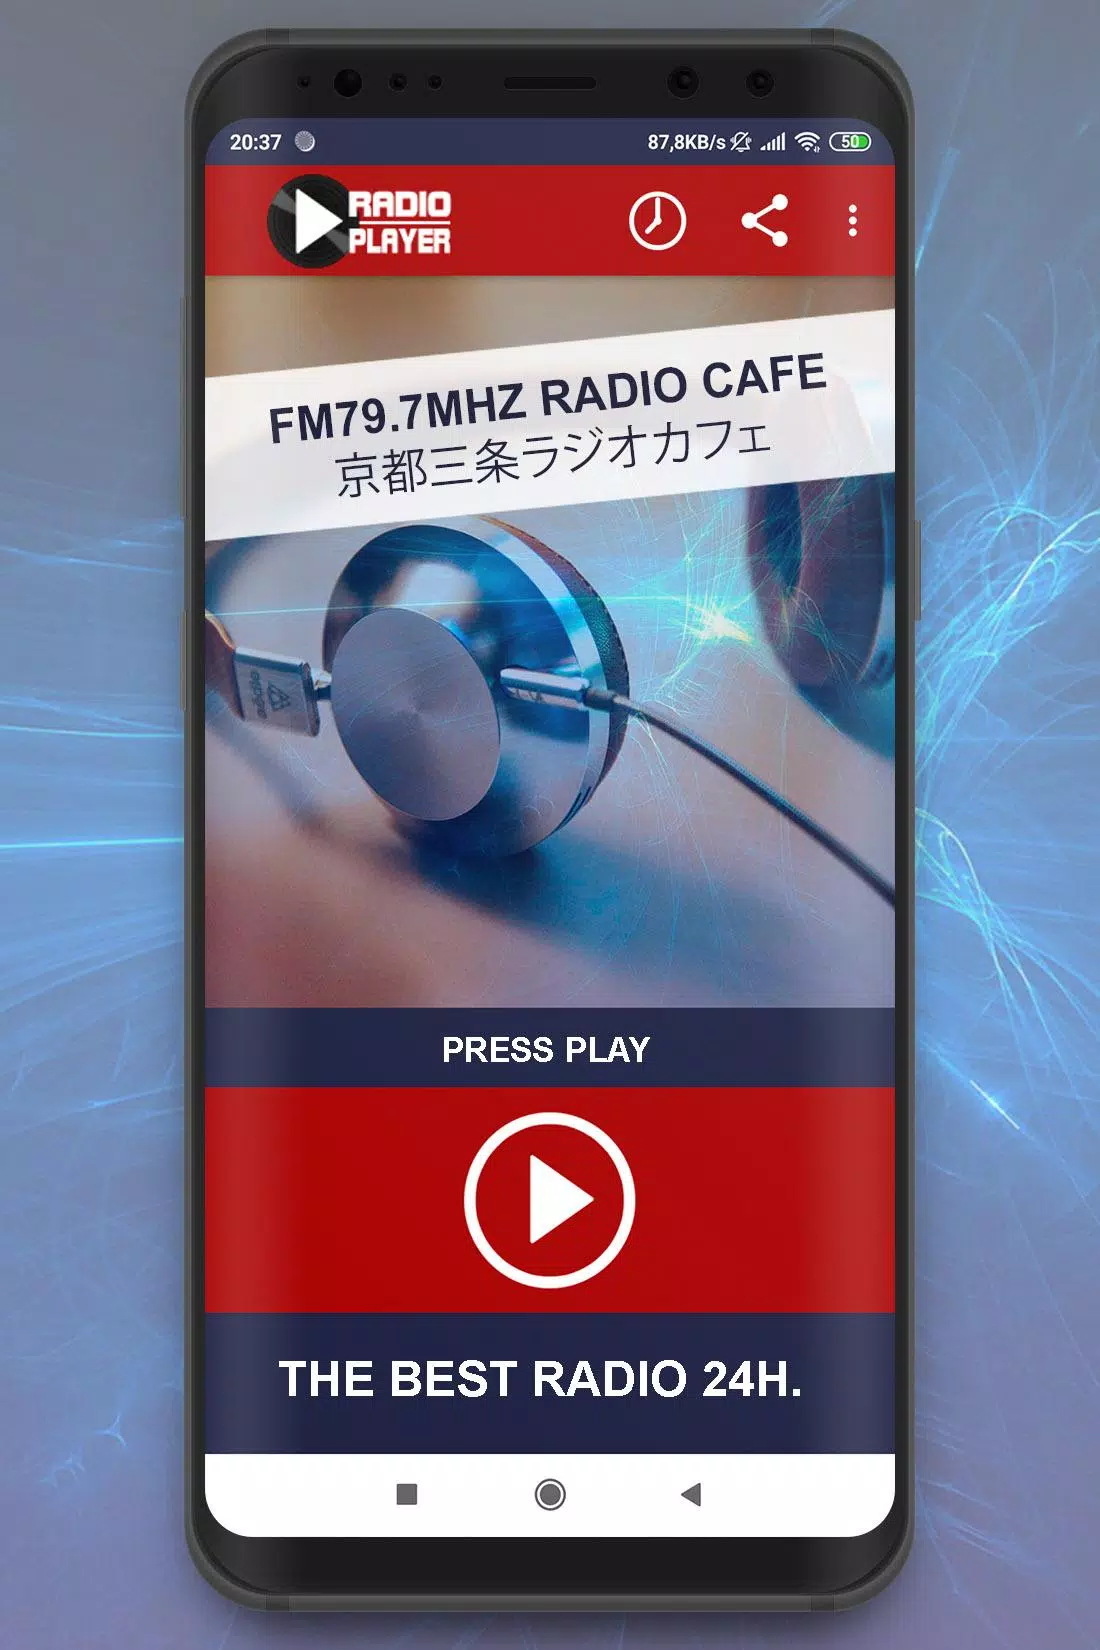 Radio Cafe 79.7 FM Kyoto Sanjo Live Player online for Android - APK Download